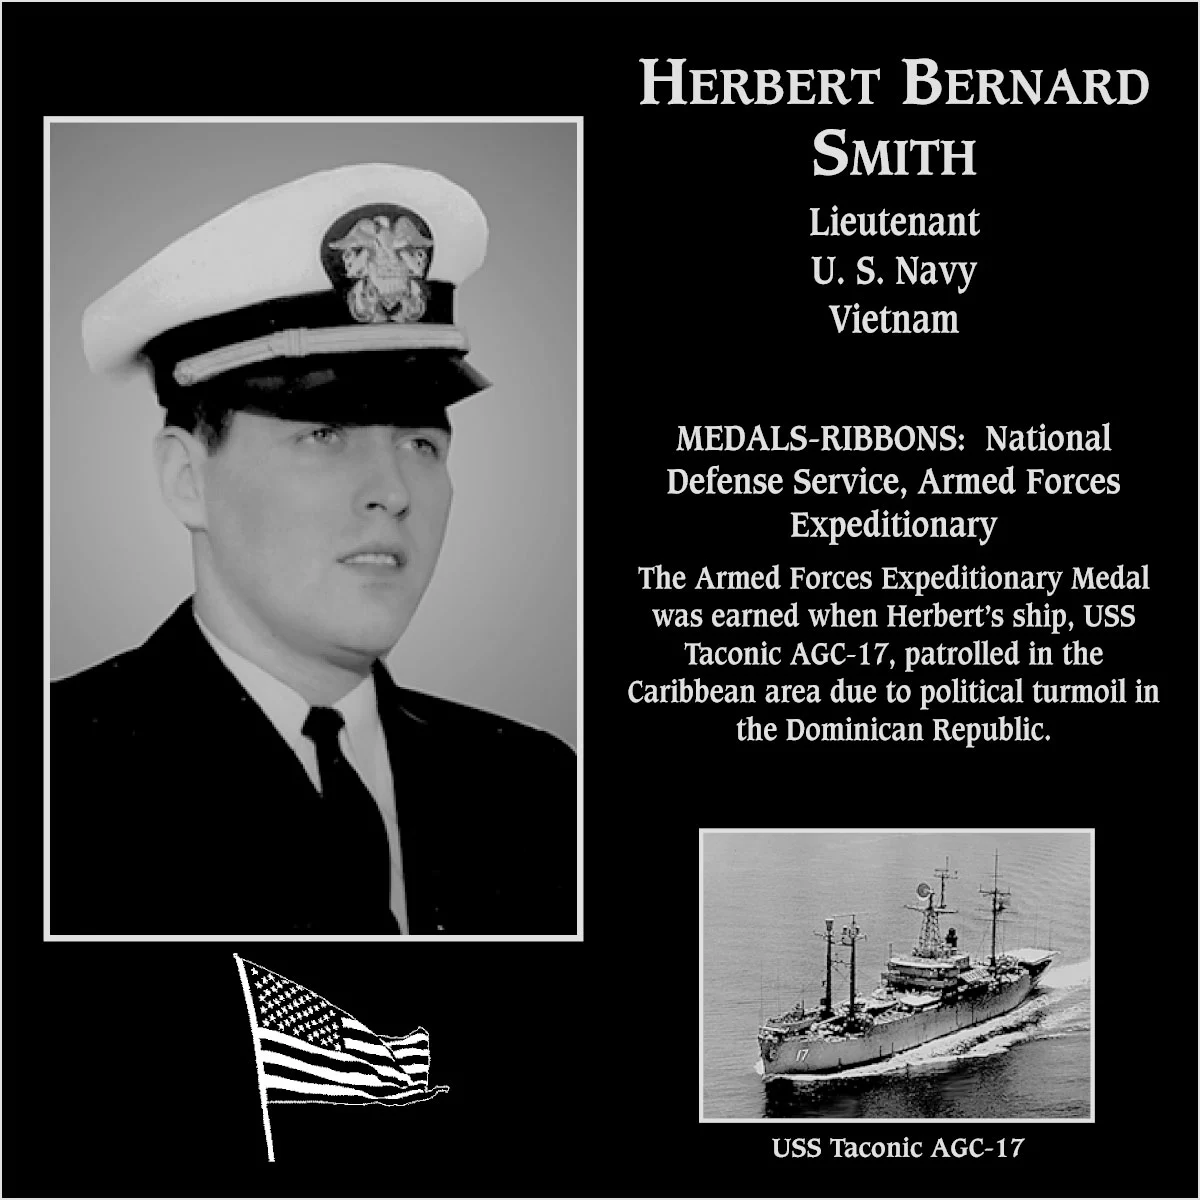 Herbert Bernard Smith